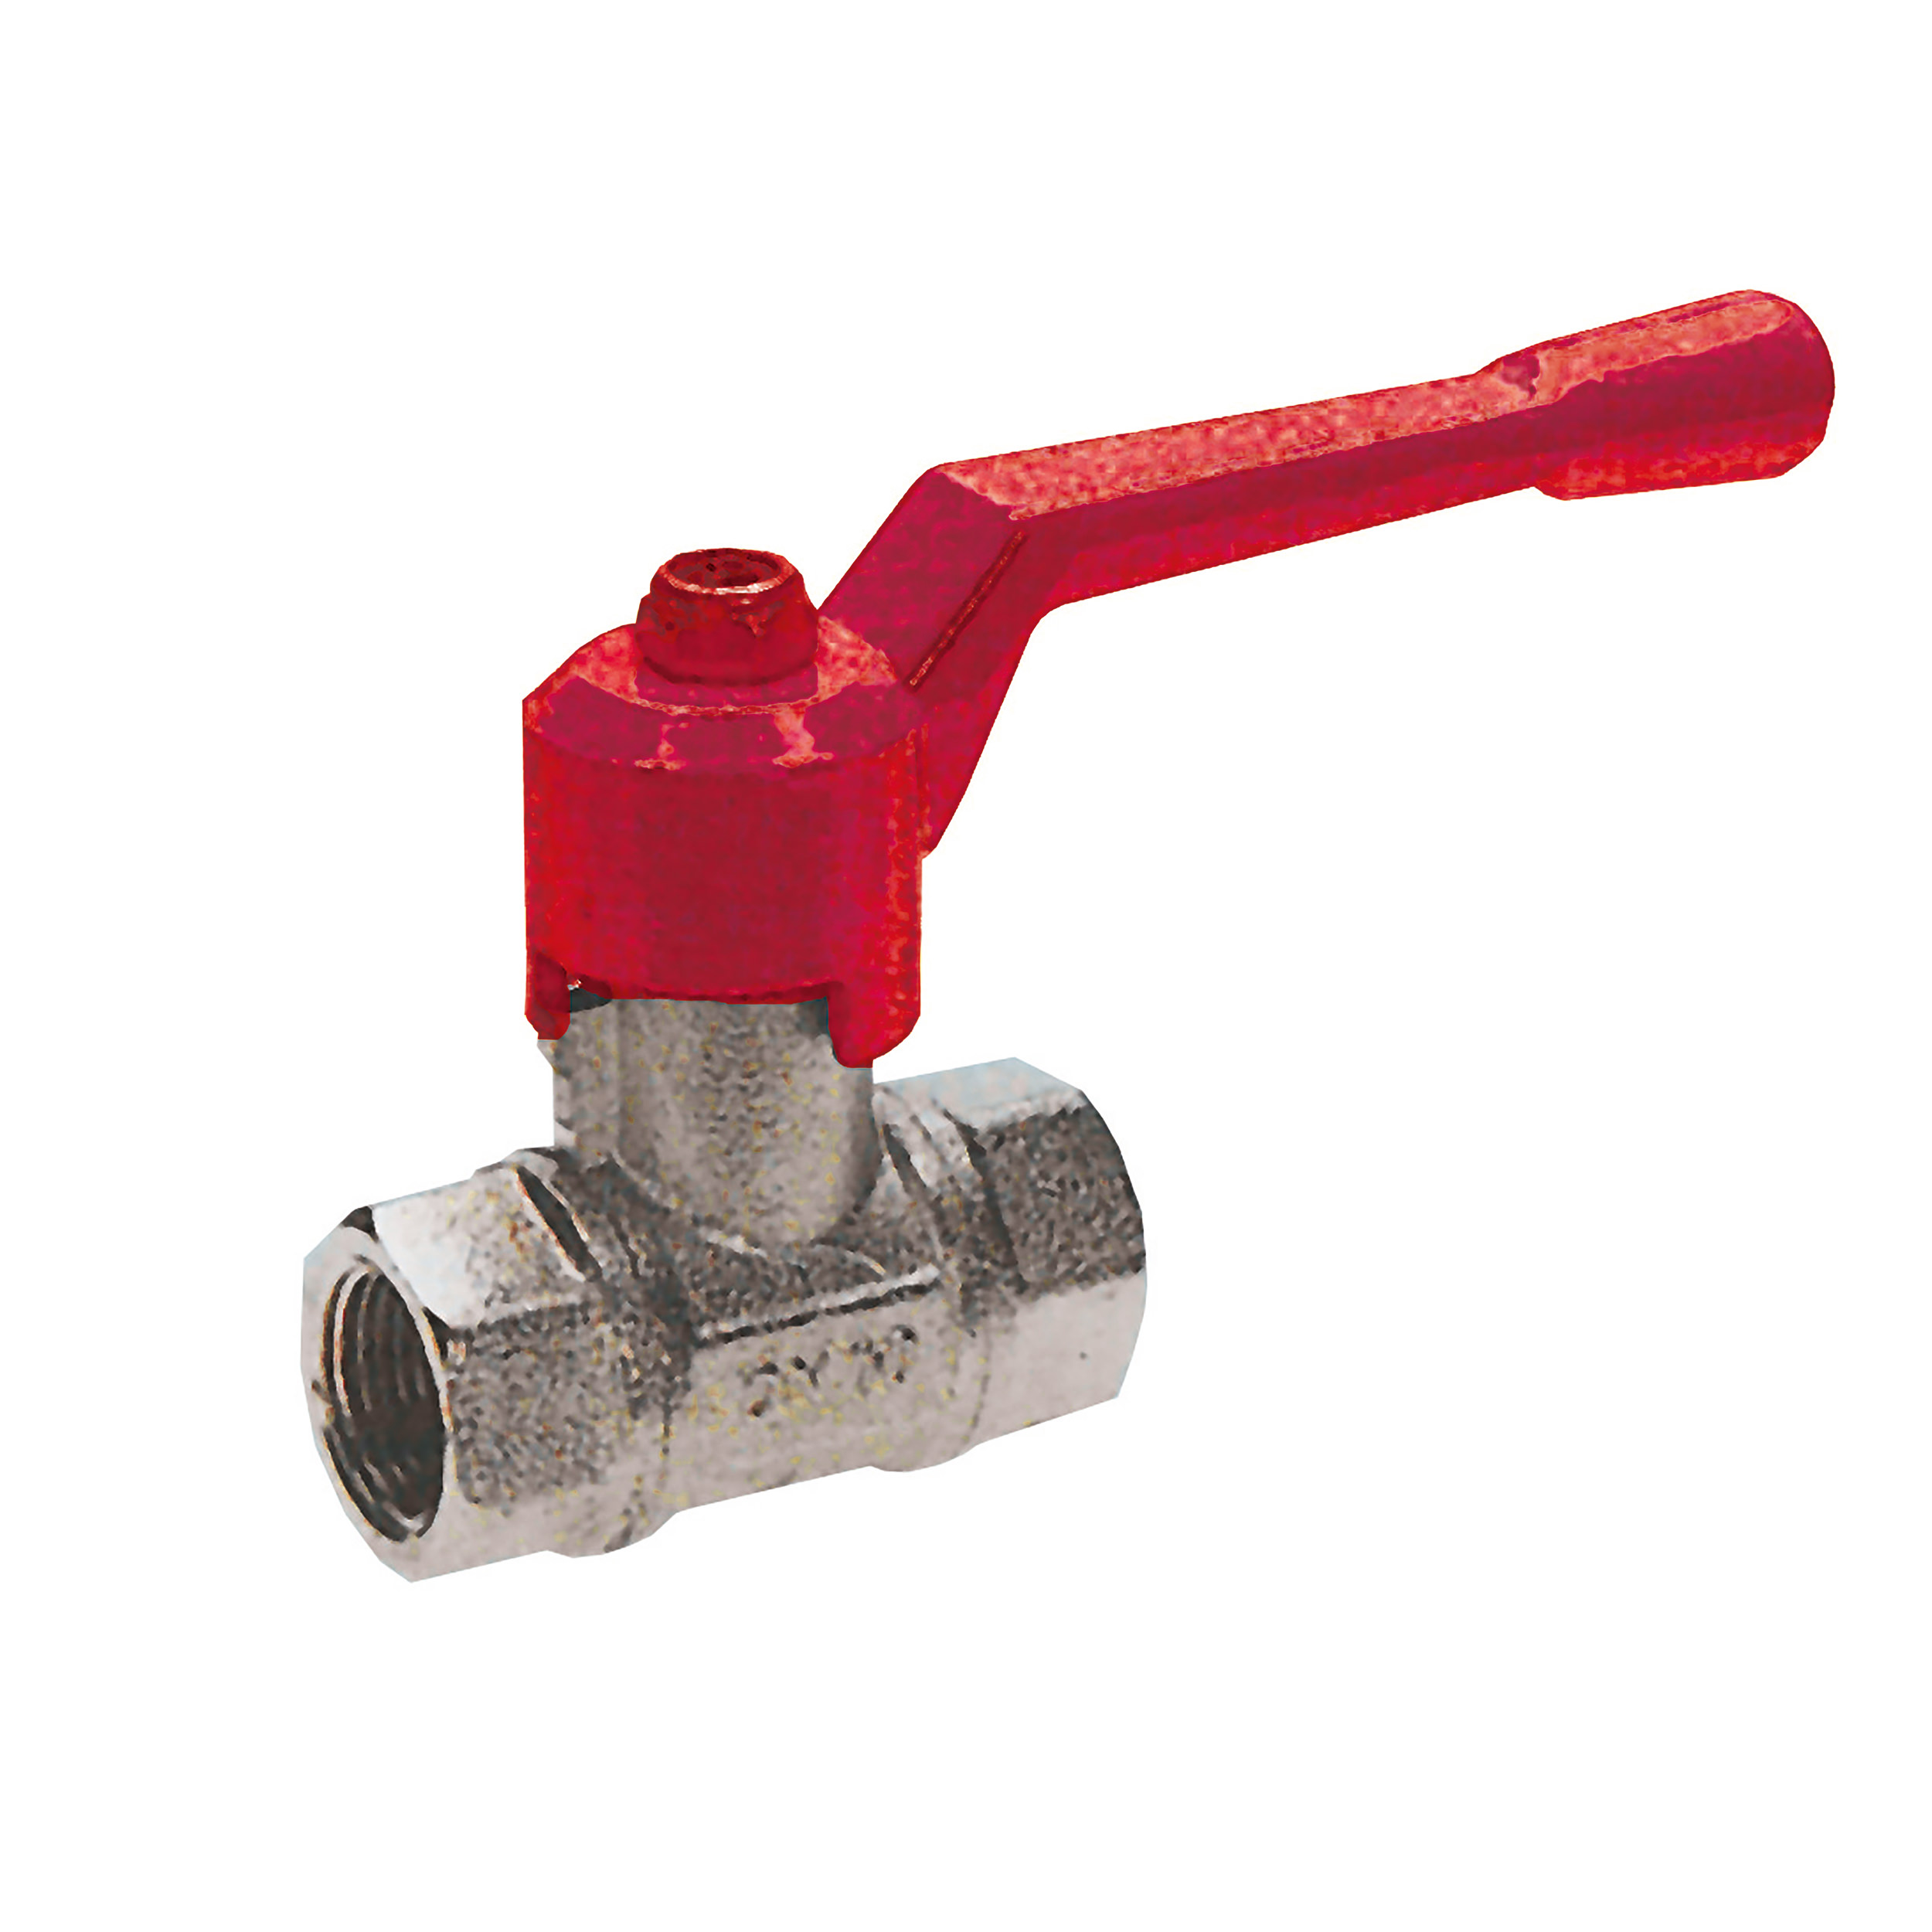 Ball valve, metal handle, full flow, max. operating pressure 435 psi, length: 43 mm, AF 23 mm, DN 10, G¼ f–f, t1/t2: 10 mm